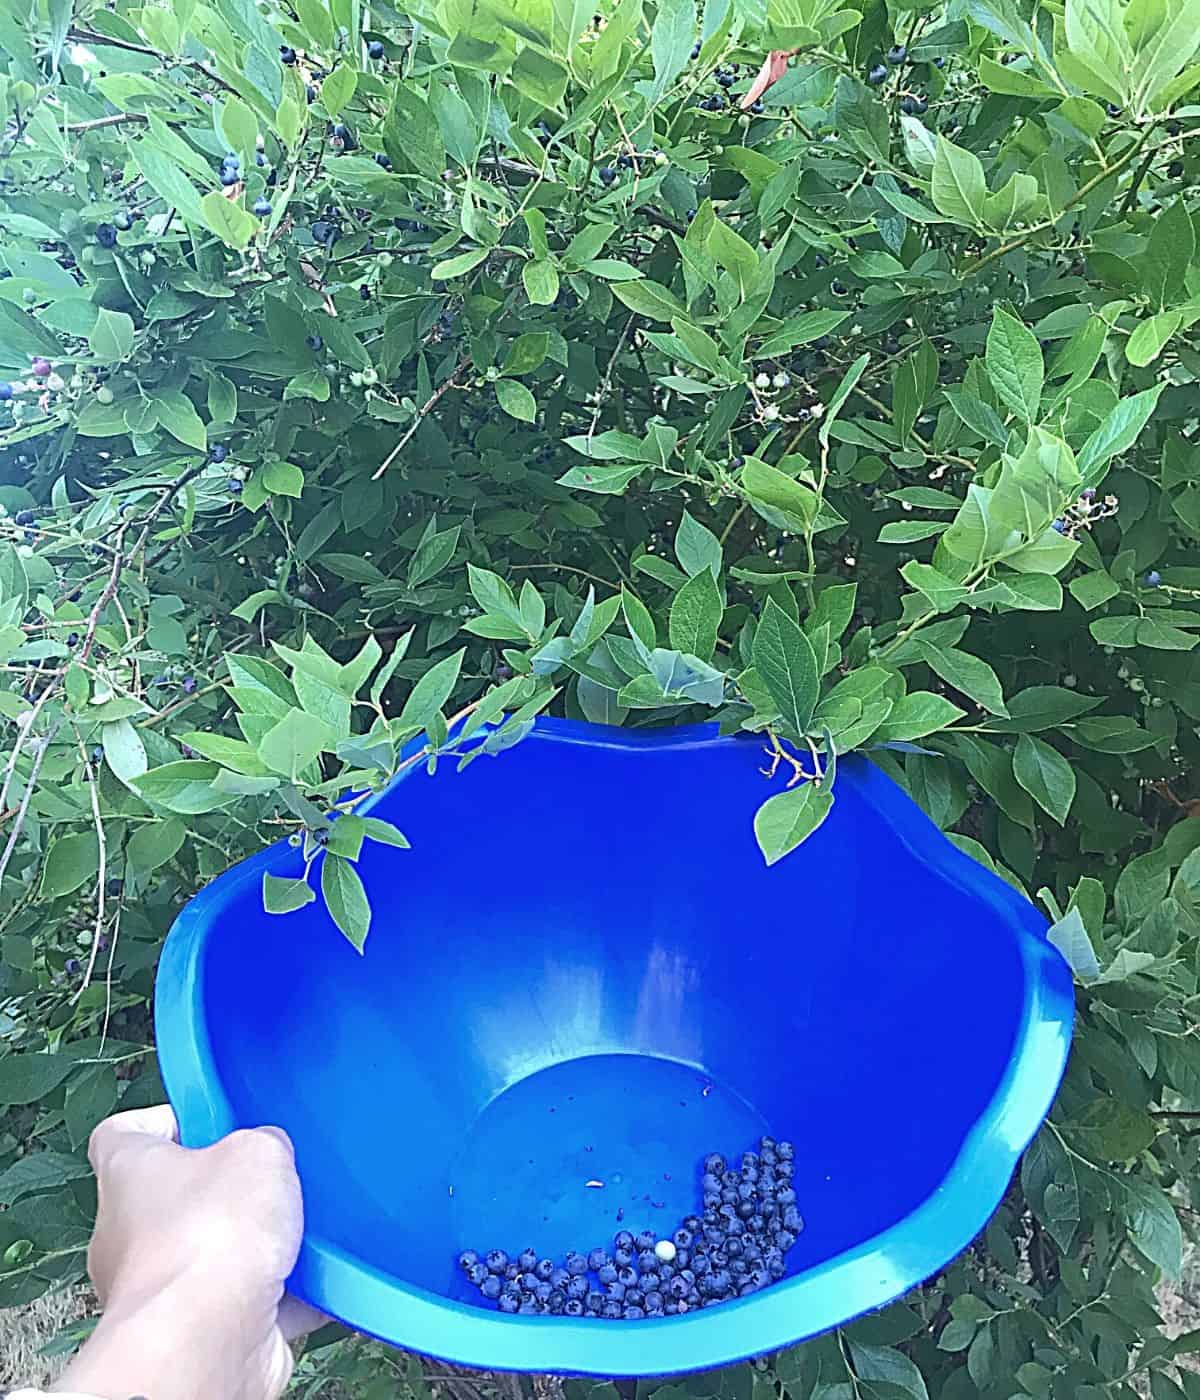 A day on blueberry farm.